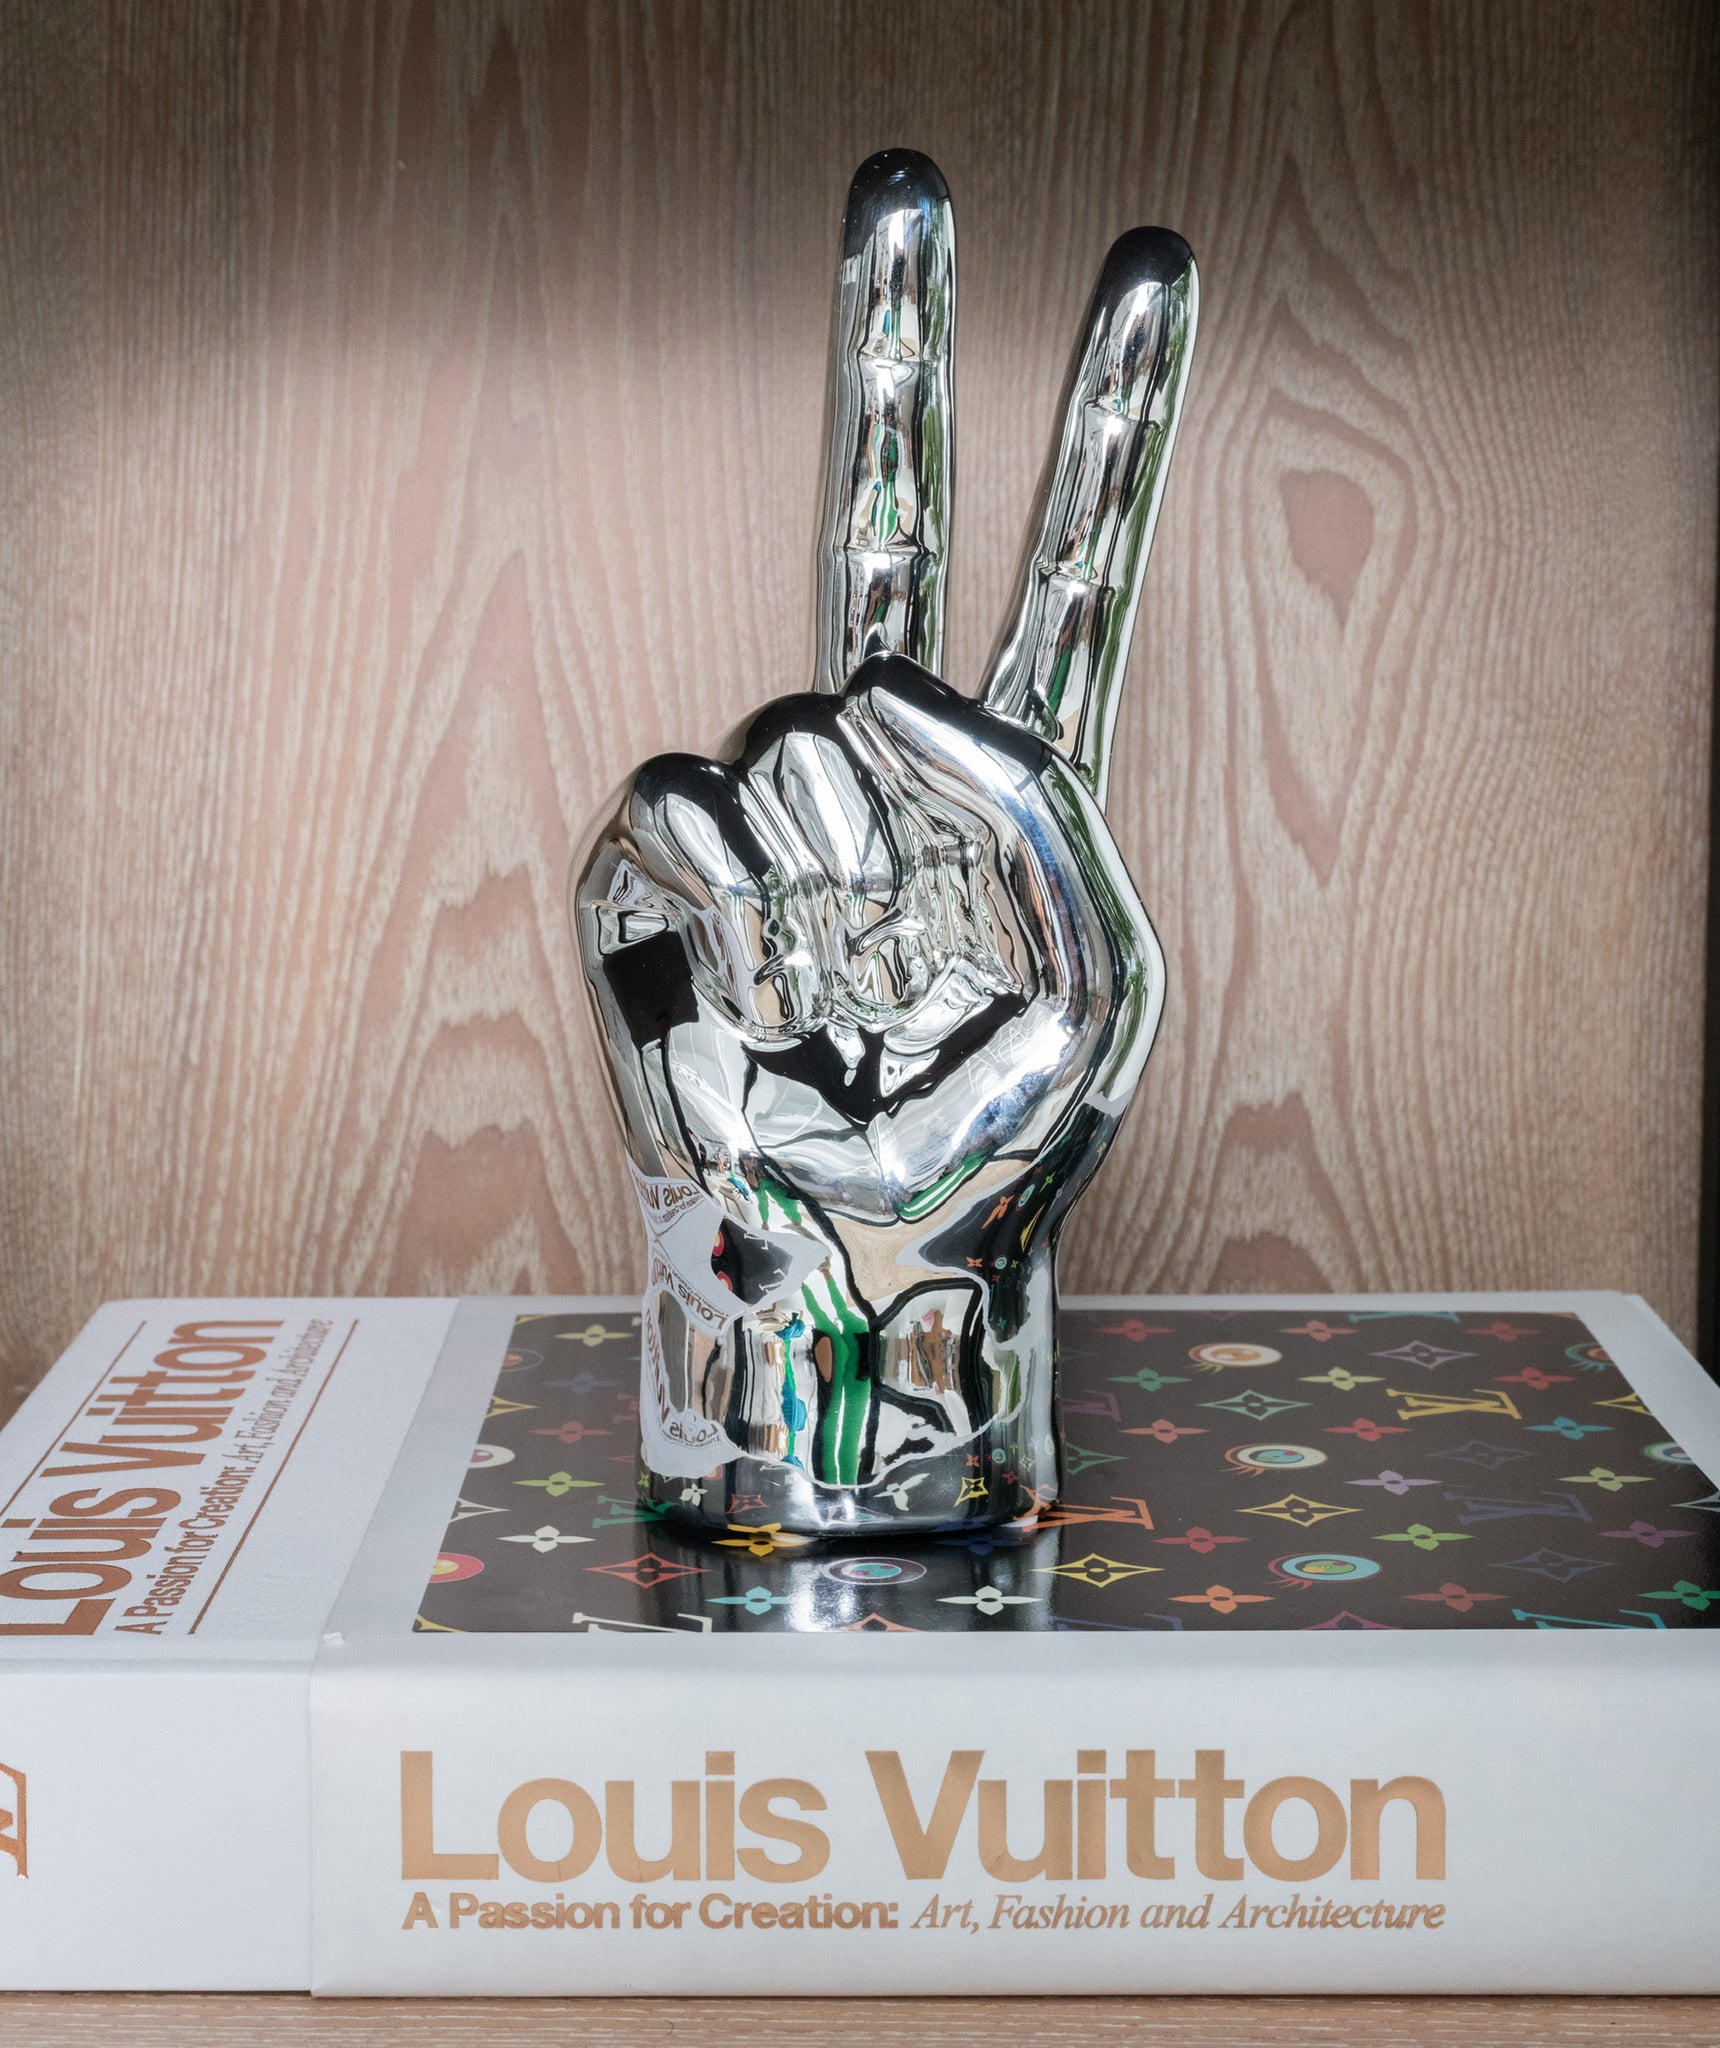 LOUIS VUITTON Art, Fashion and Architecture by Takashi Murakami